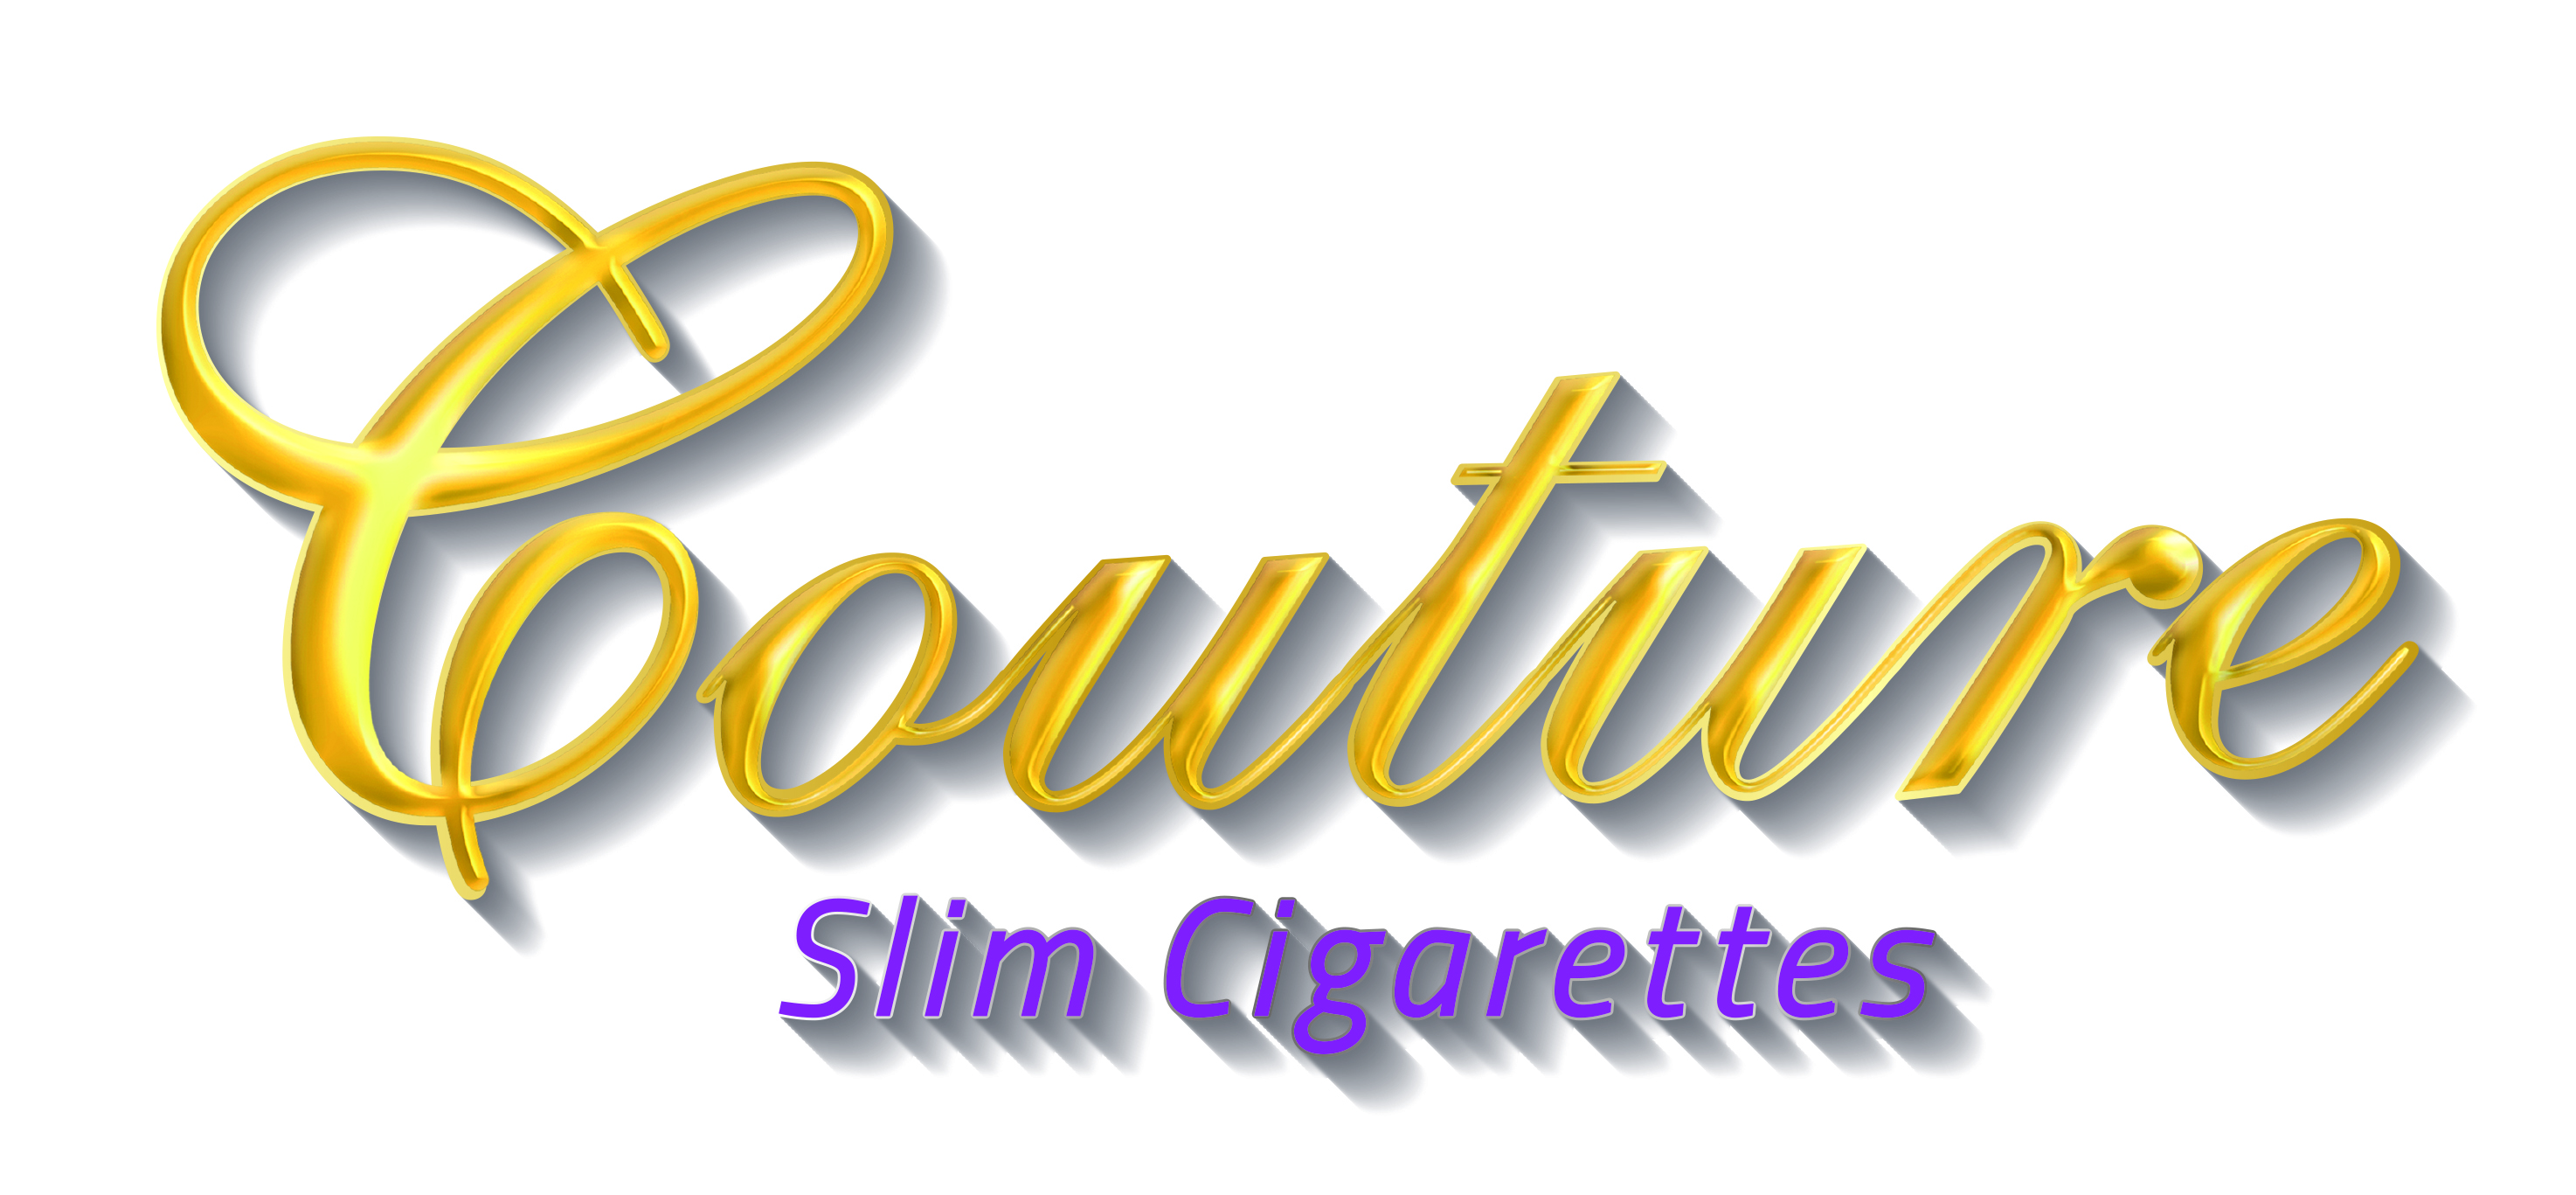 Couture_Slims_Logo_300dpi_CMYK